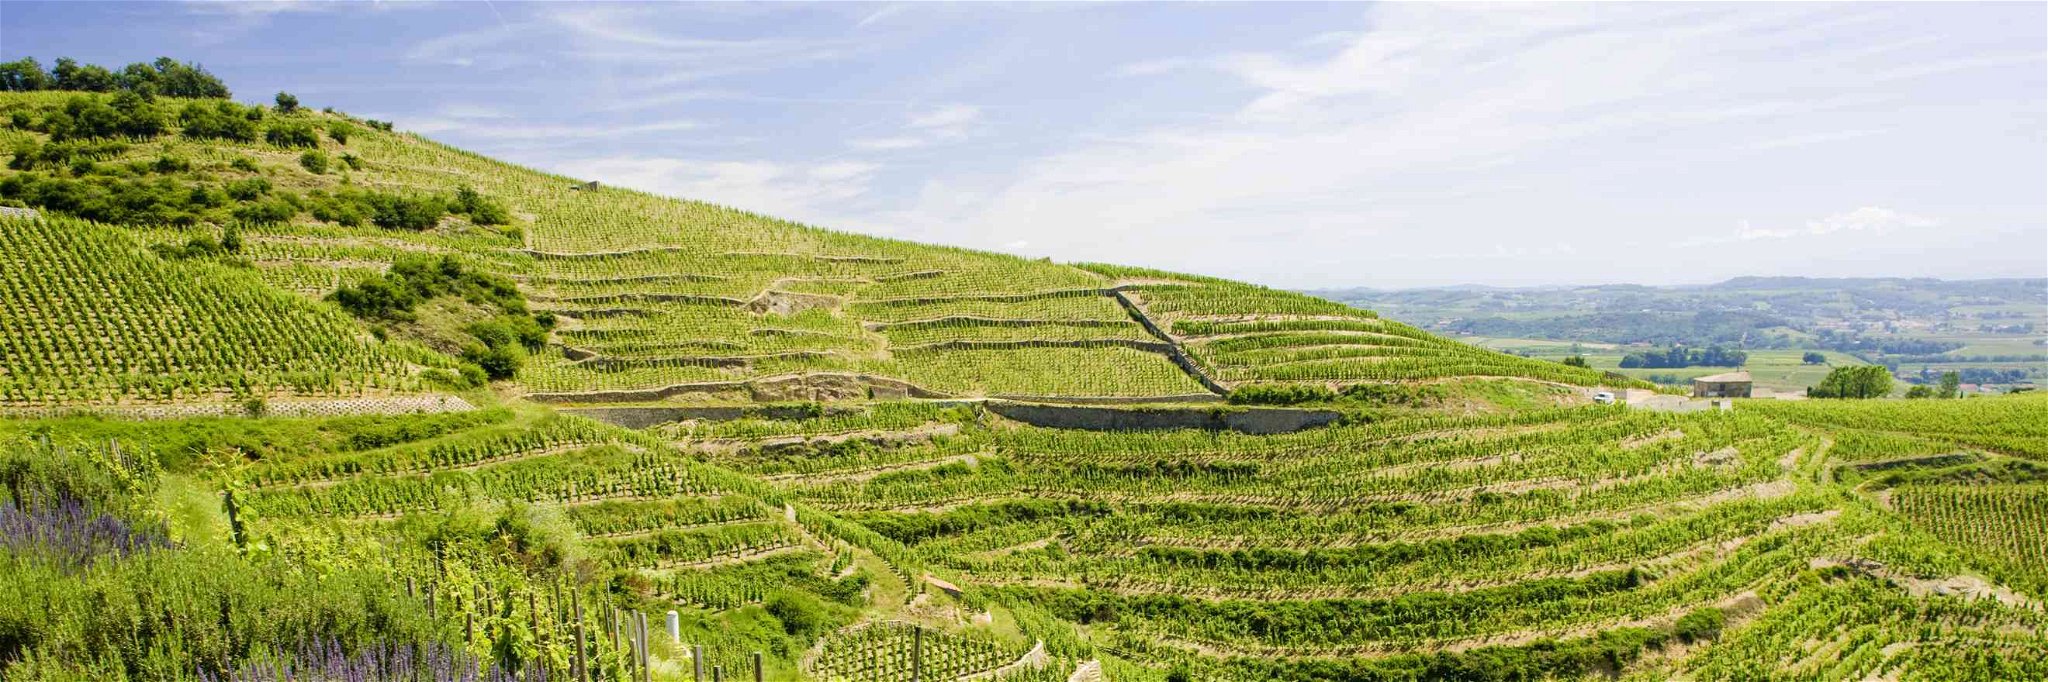 Summer in the Rhône Vineyards in Southern France